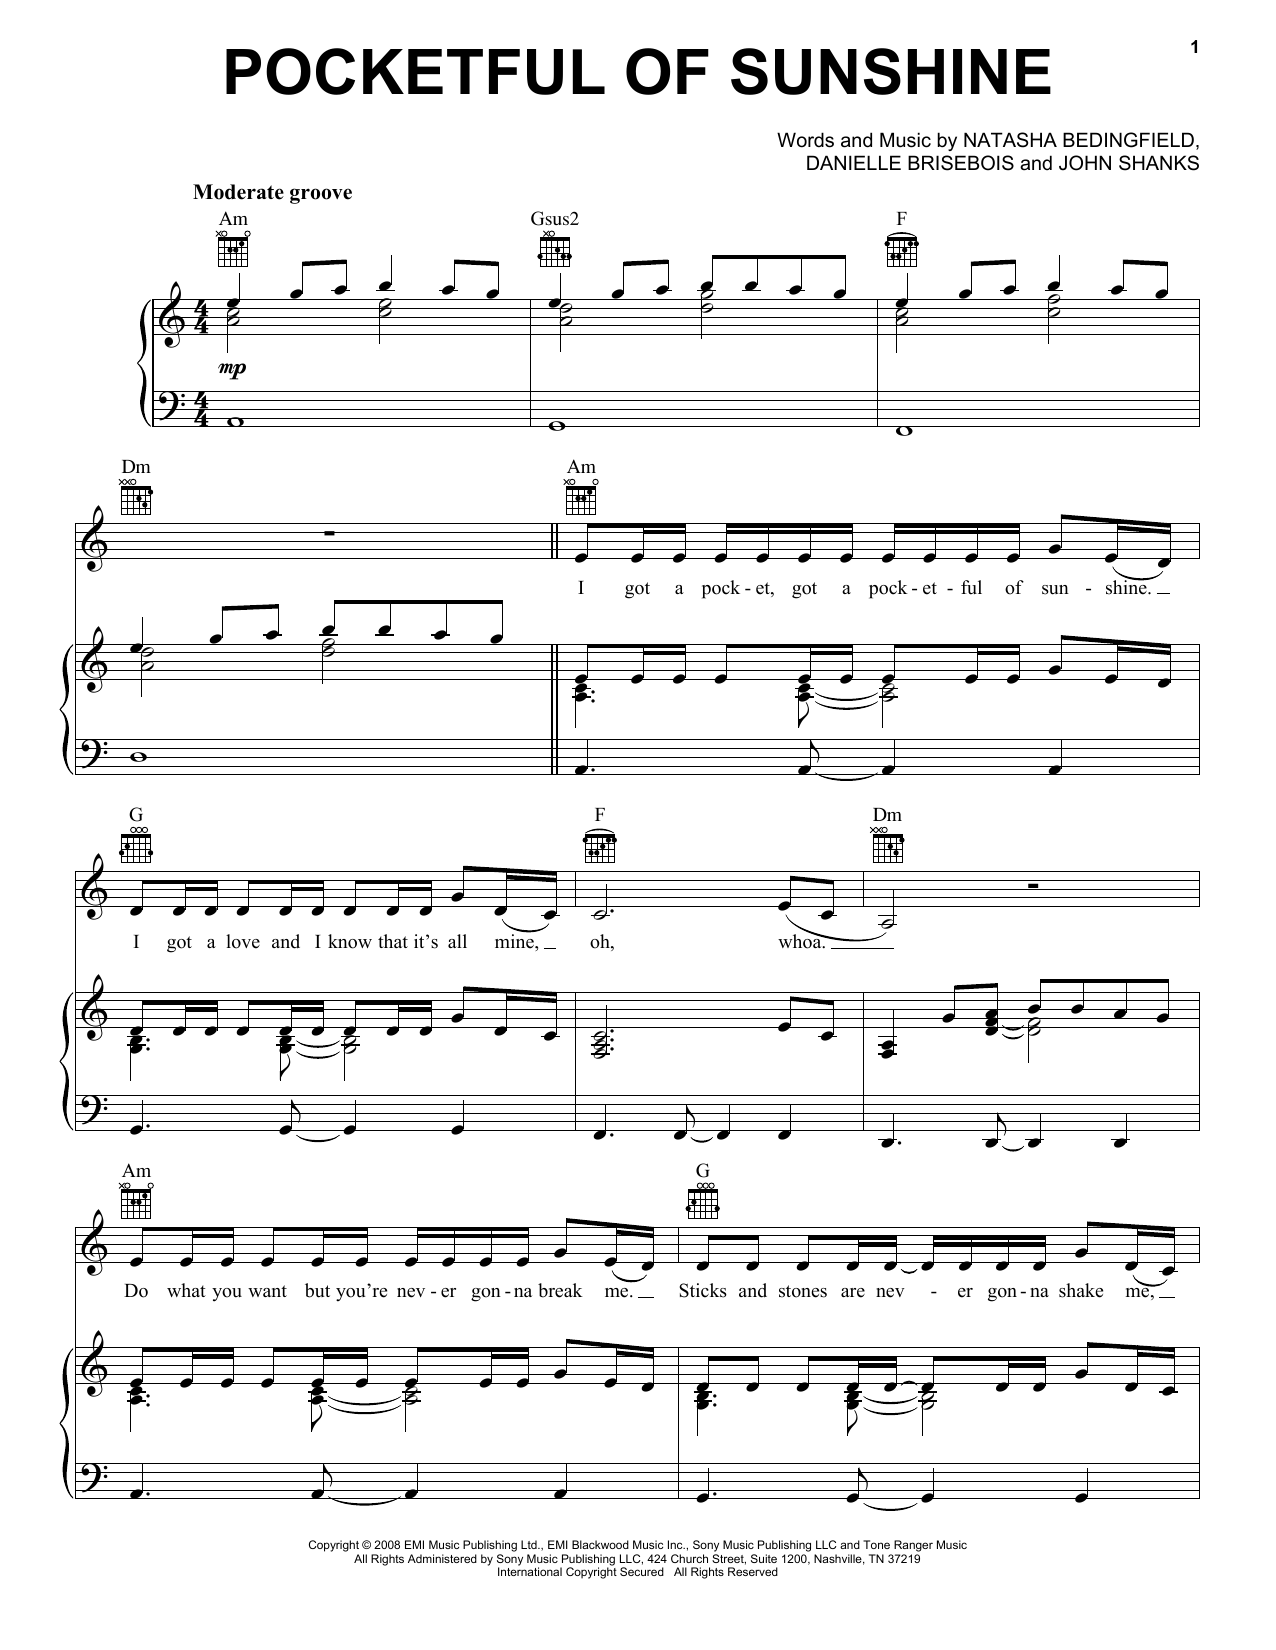 Natasha Bedingfield Pocketful Of Sunshine (arr. Alan Billingsley) Sheet Music Notes & Chords for SSA - Download or Print PDF